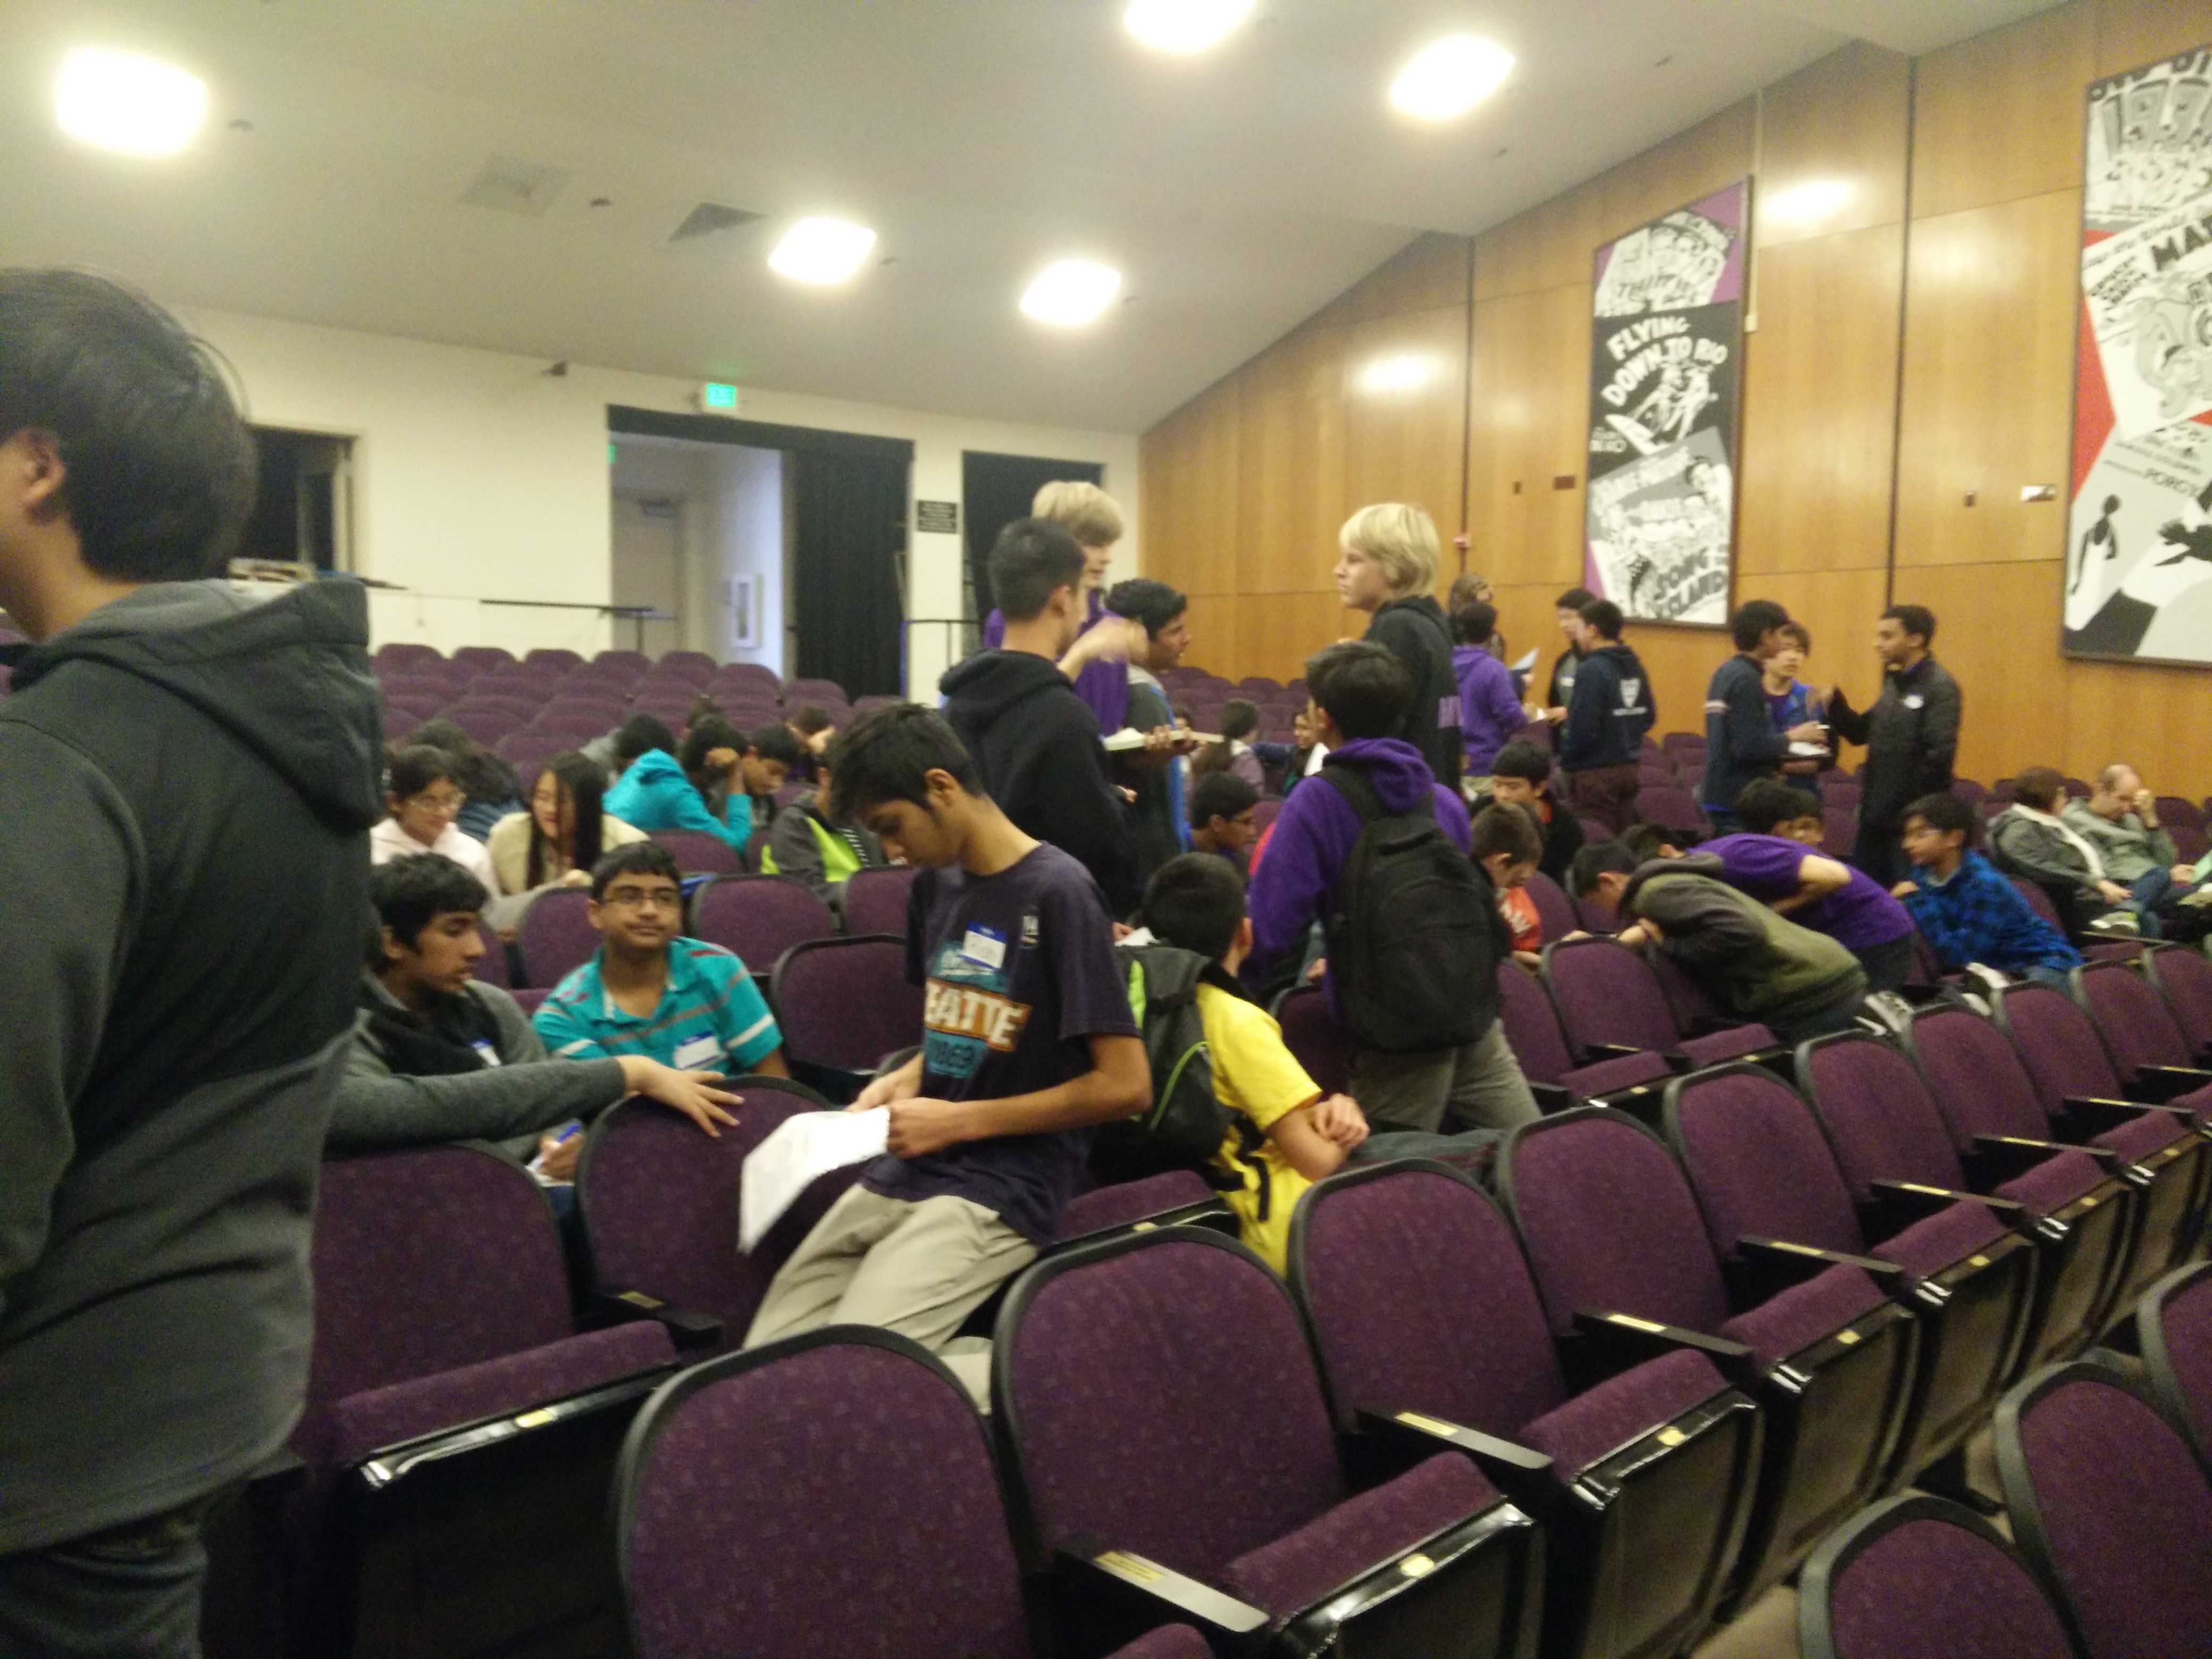 Robotics team members exchange strategies in small groups in the auditorium.